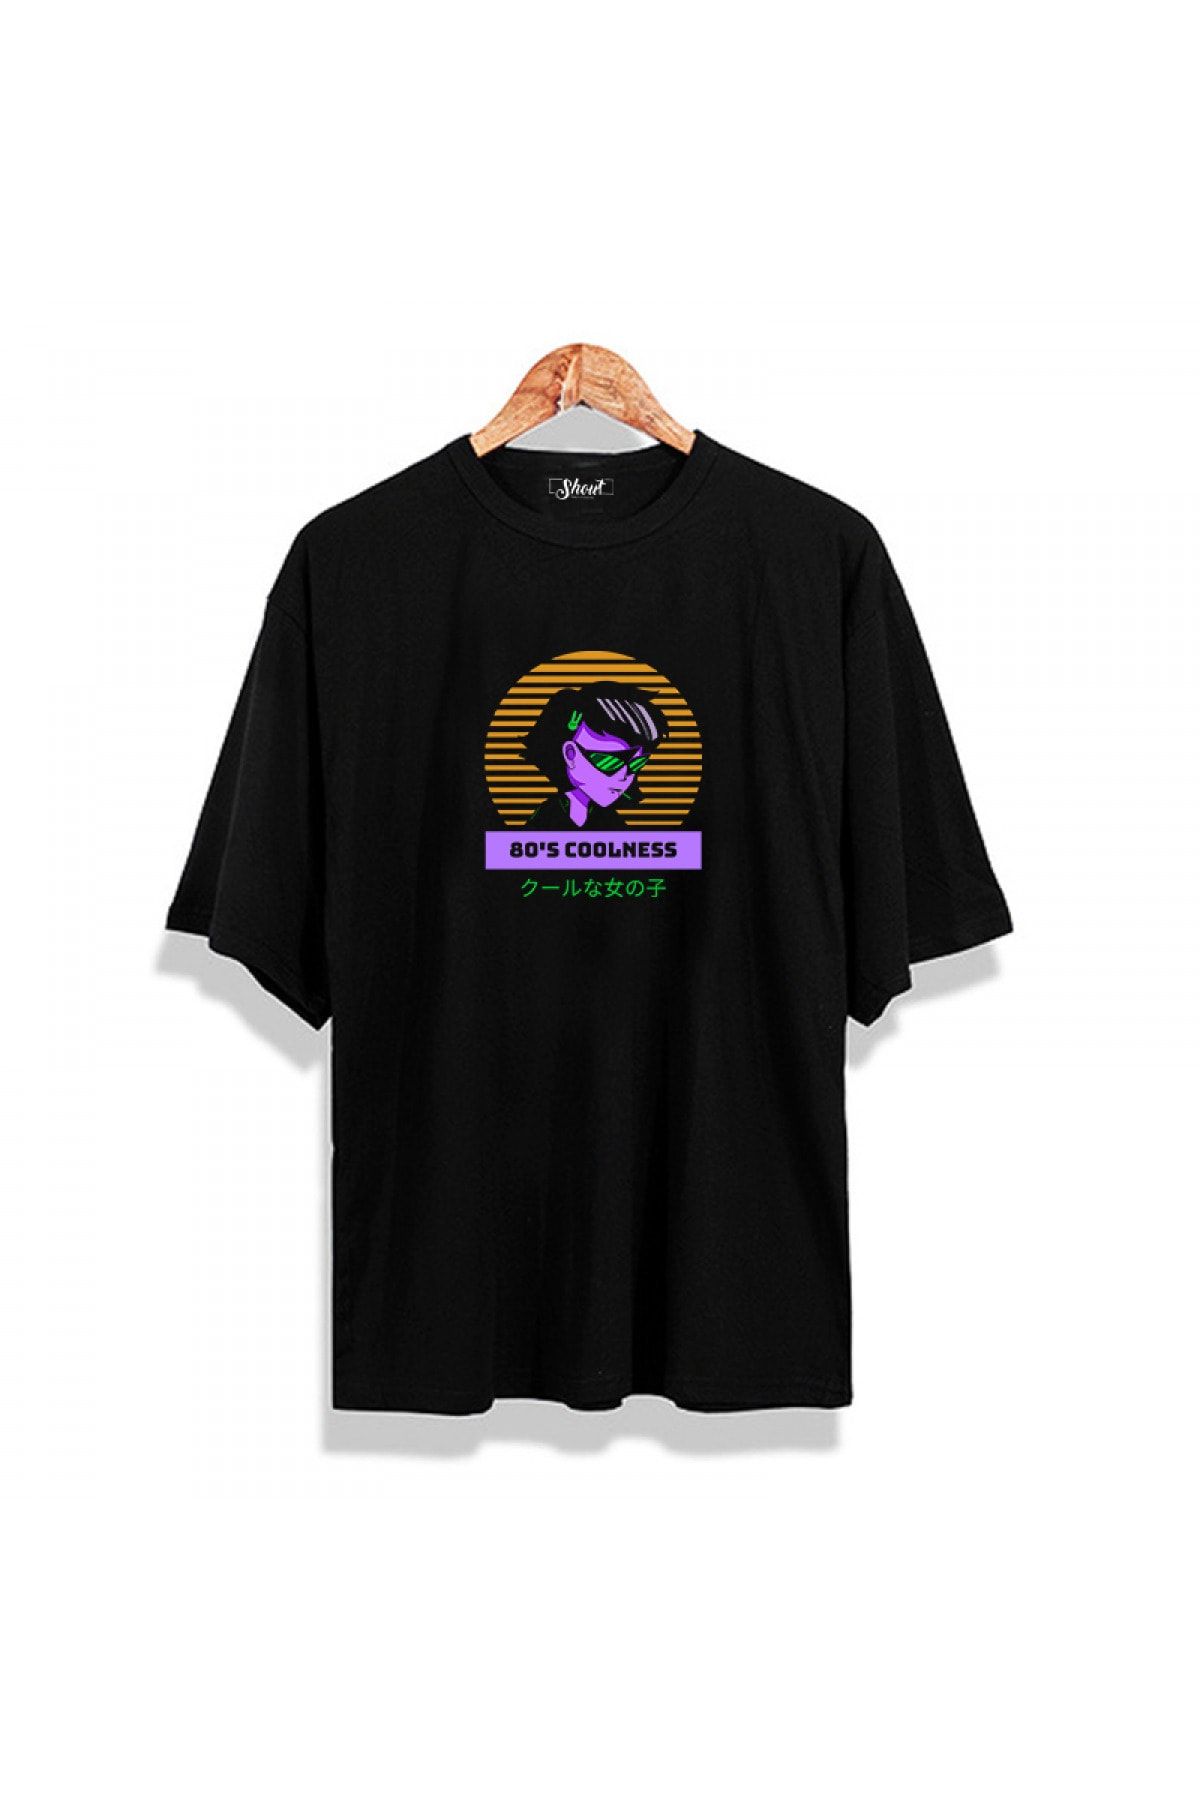 Shout Unisex Siyah Oversize 80's Coolness Vintage T-shirt